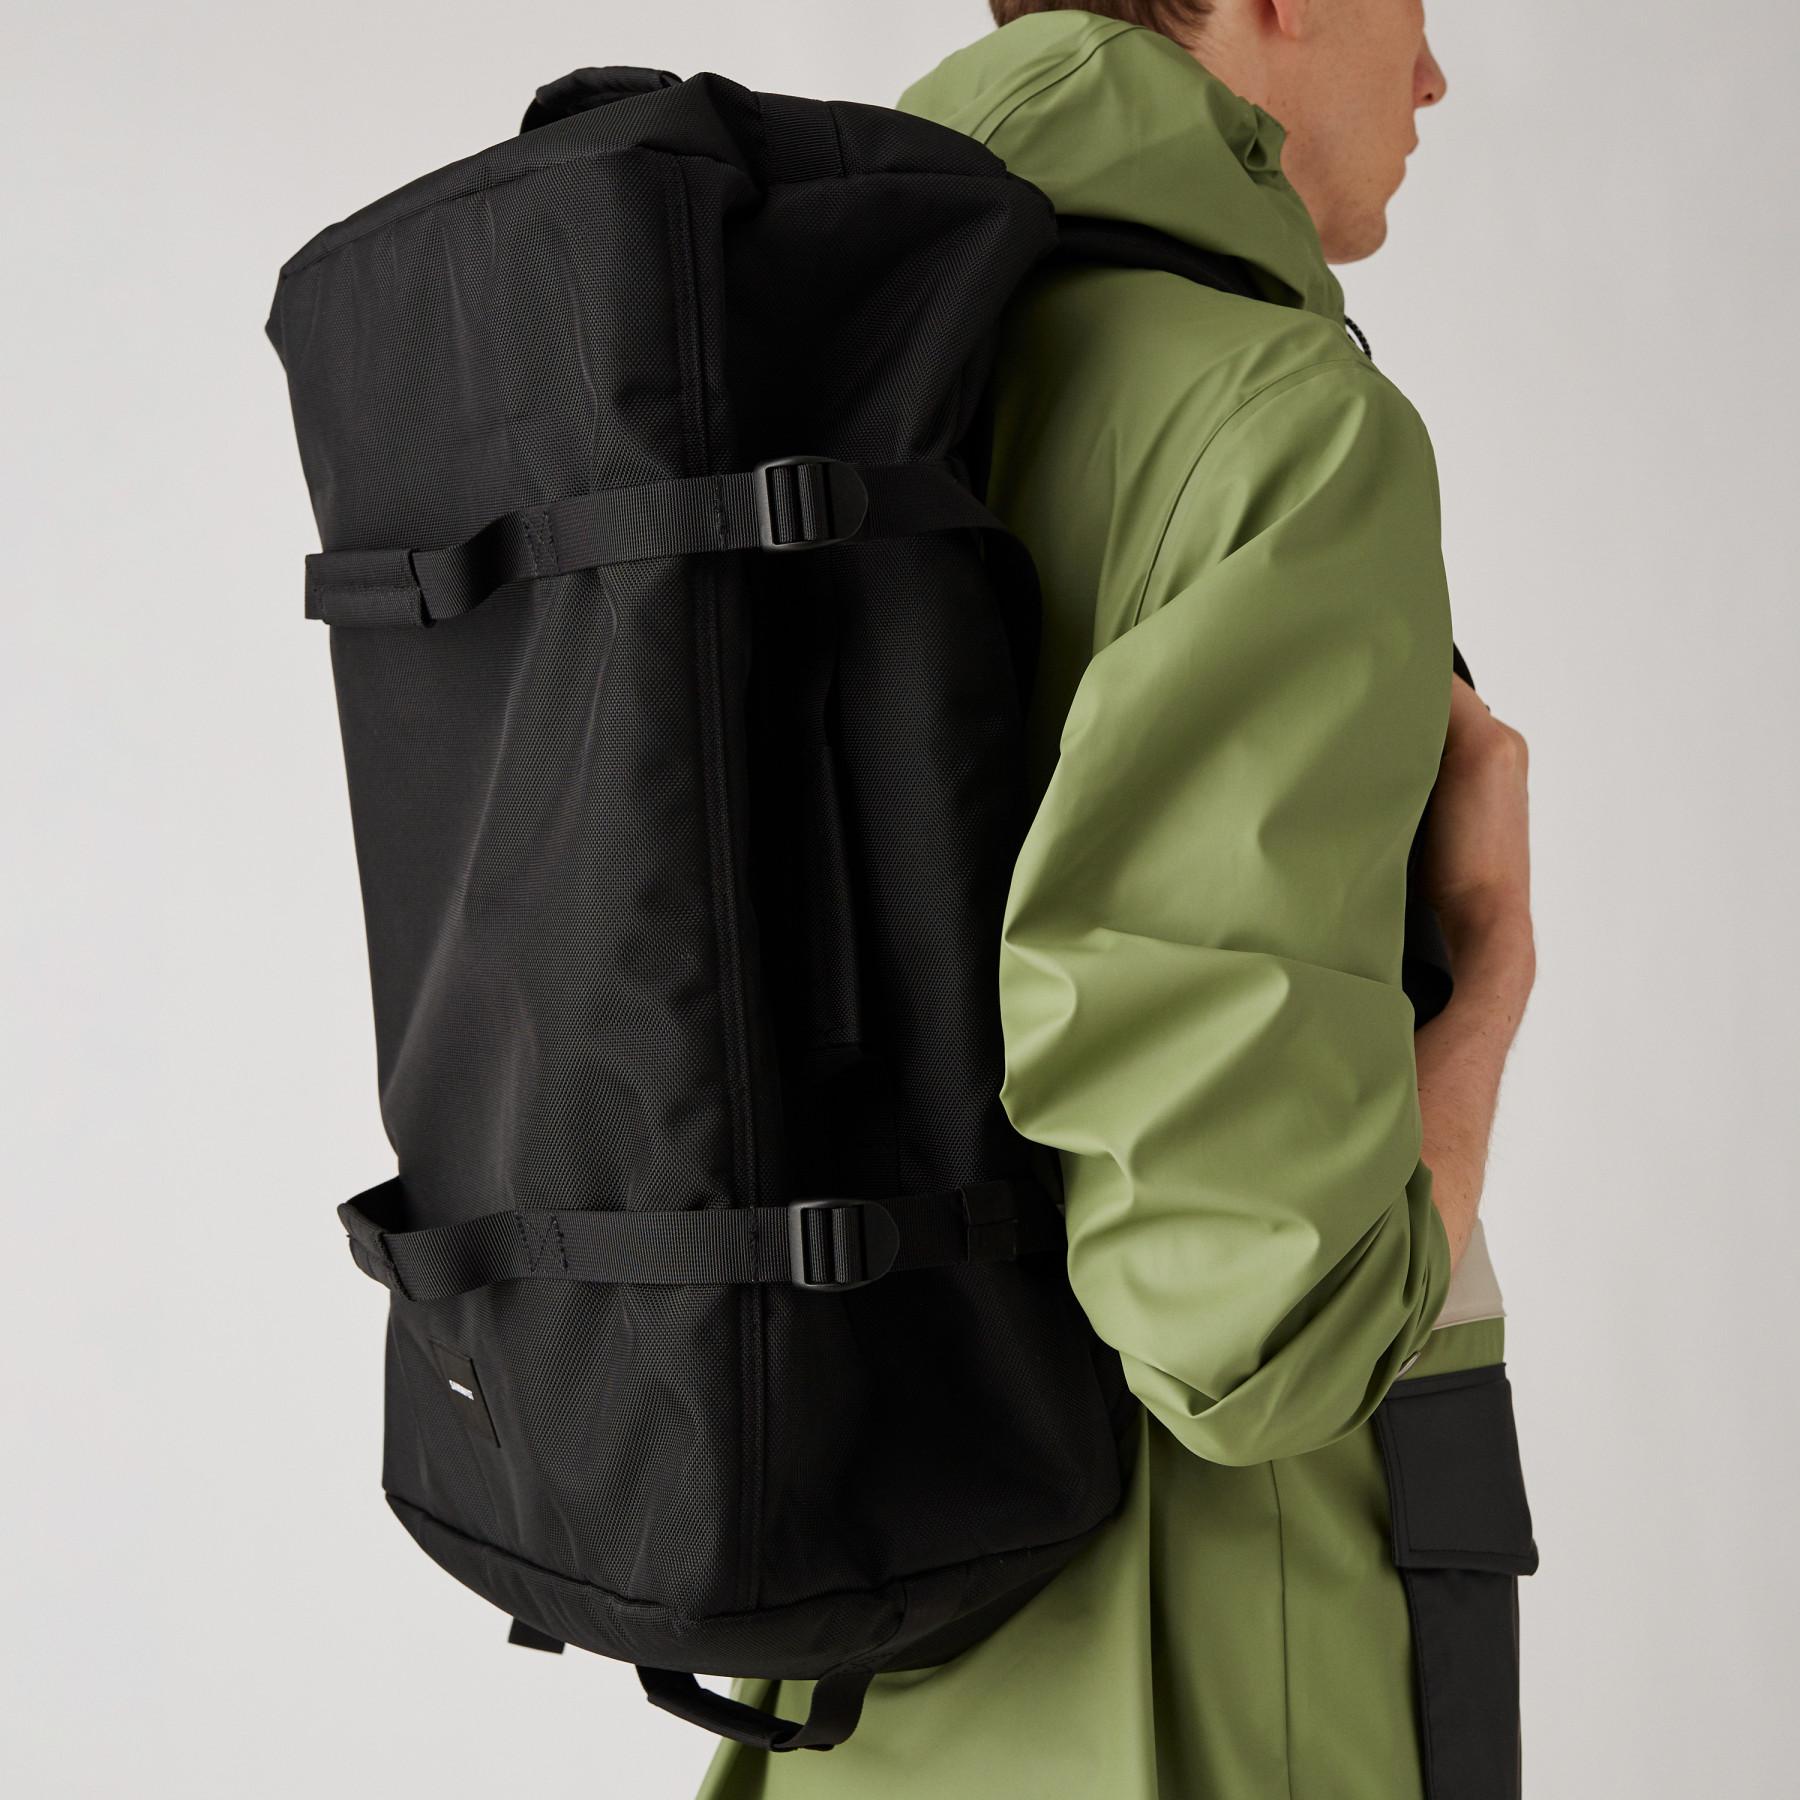 Backpack Sandqvist Zack New